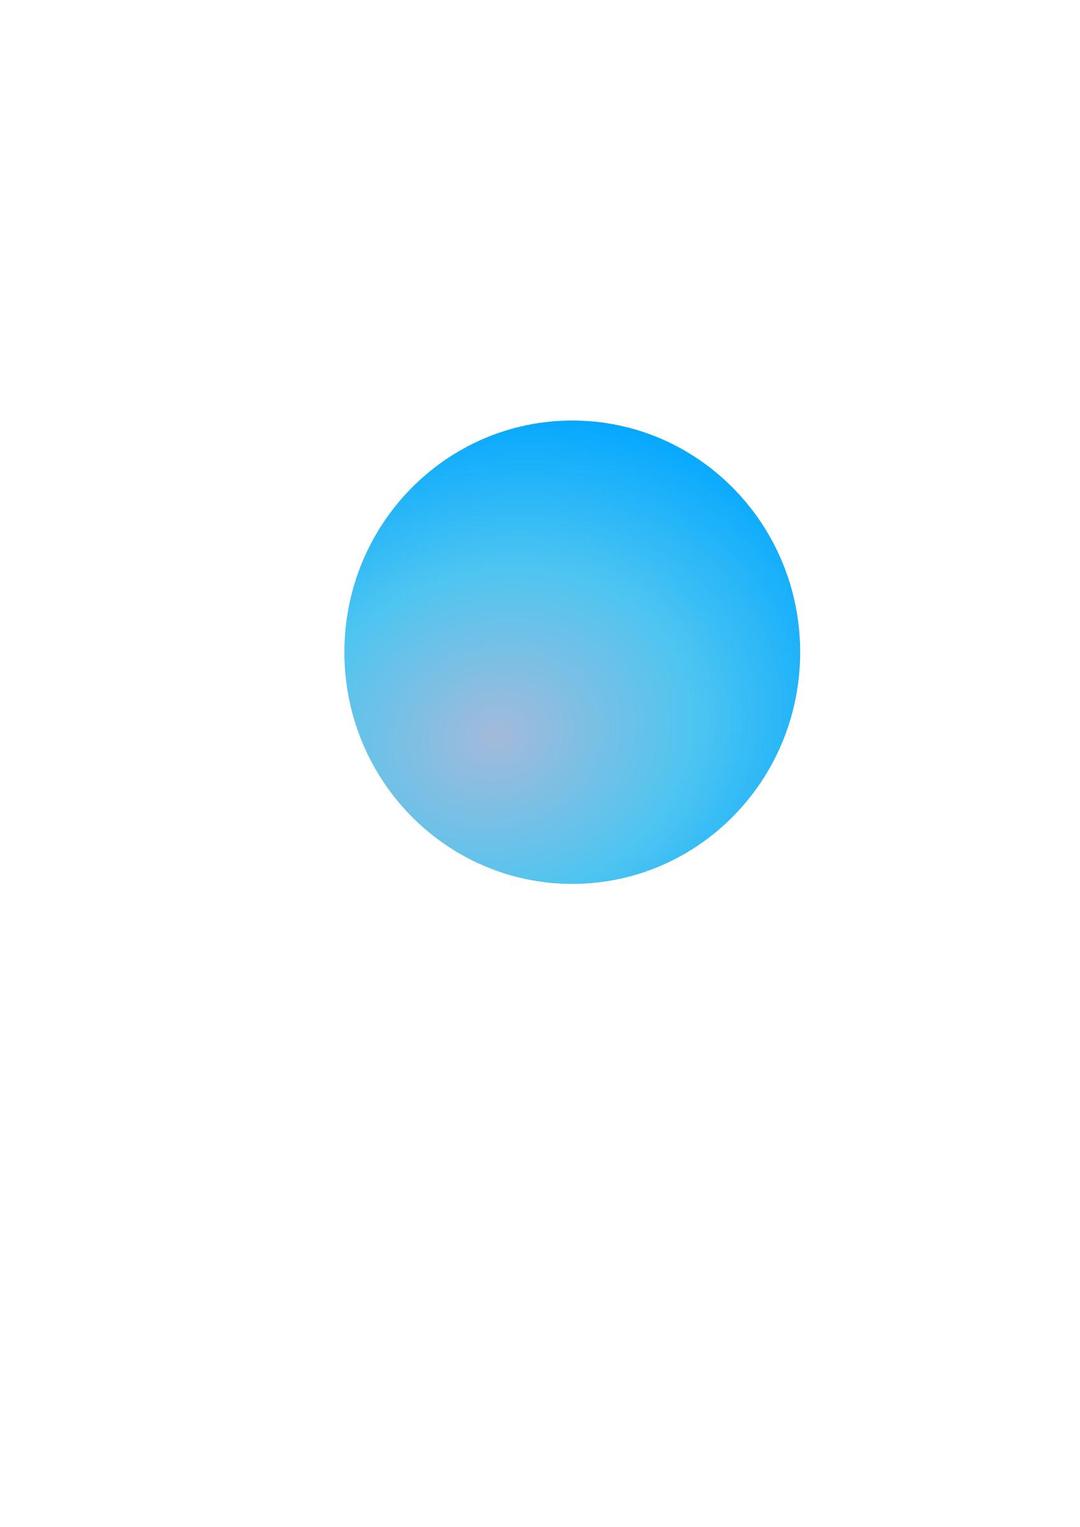 Planet Urano png transparent